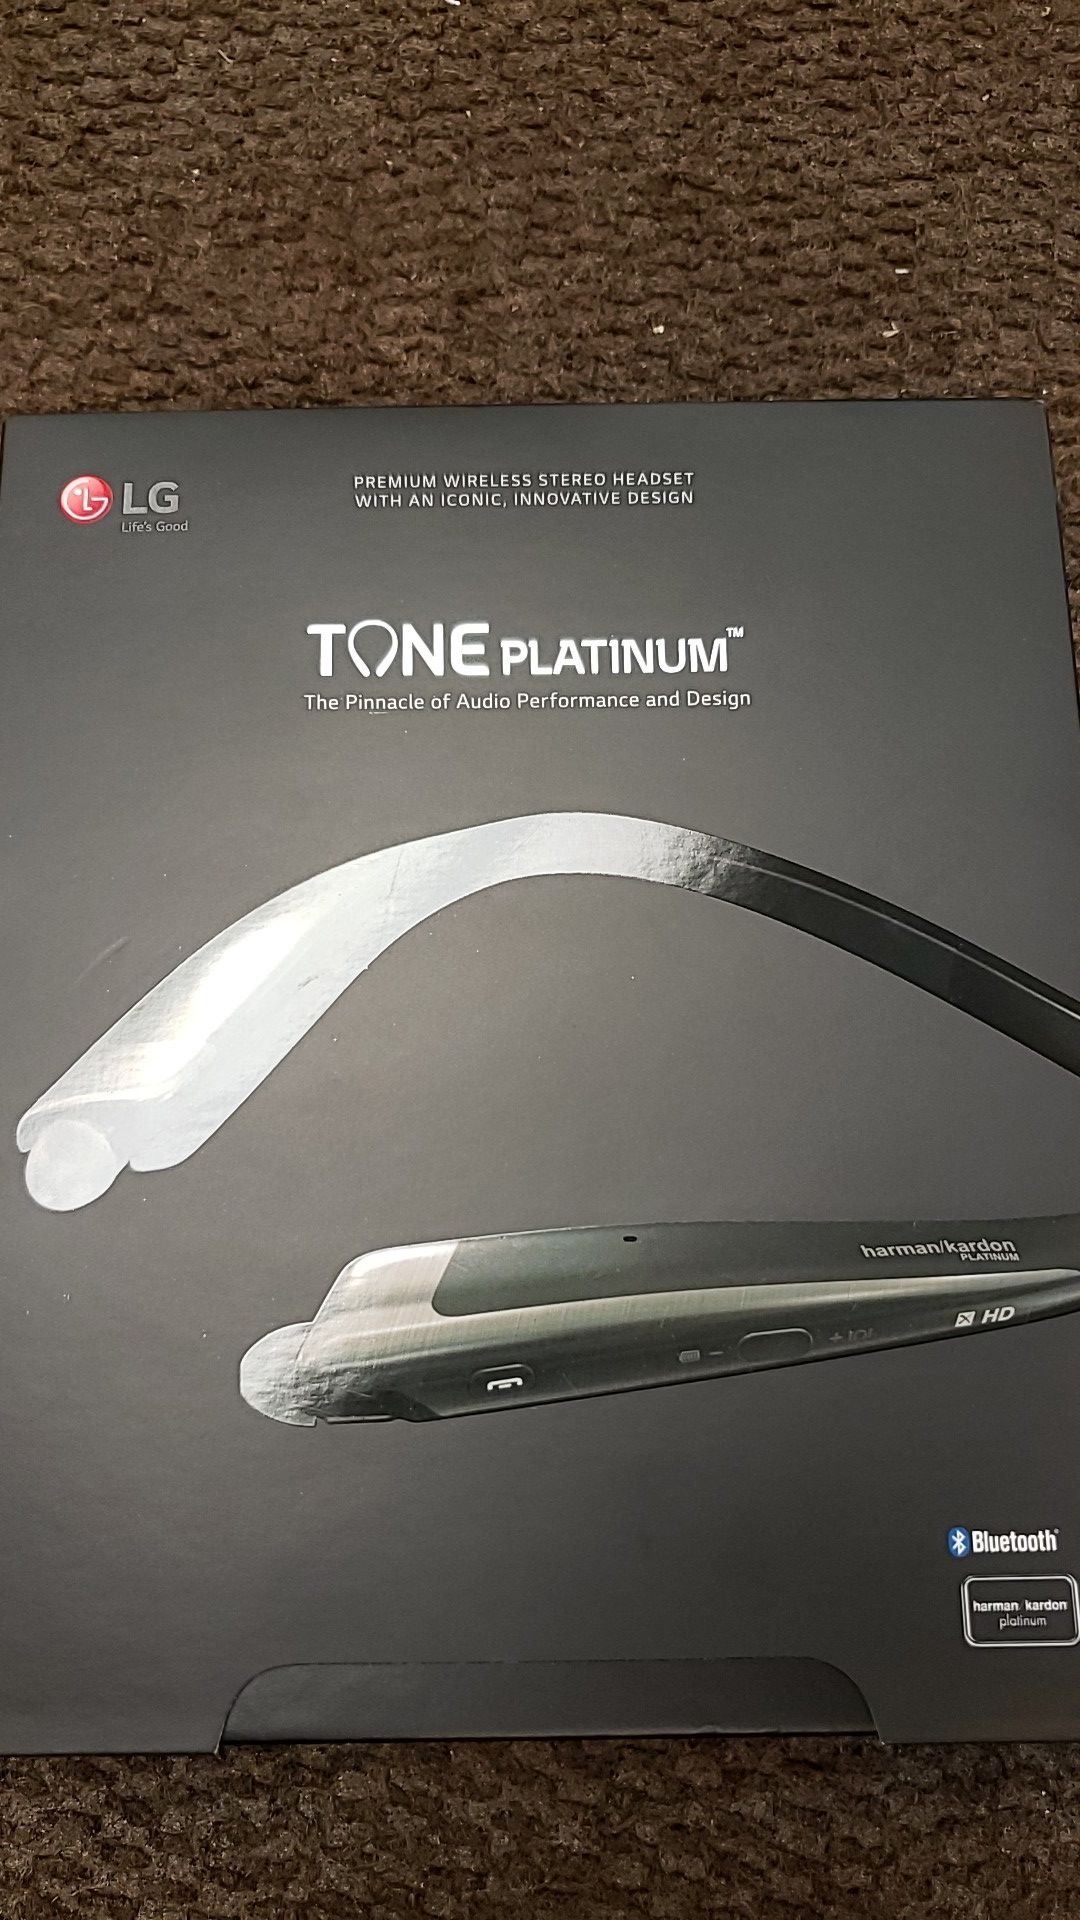 Lg wireless tone platinum Harman/kardon headset